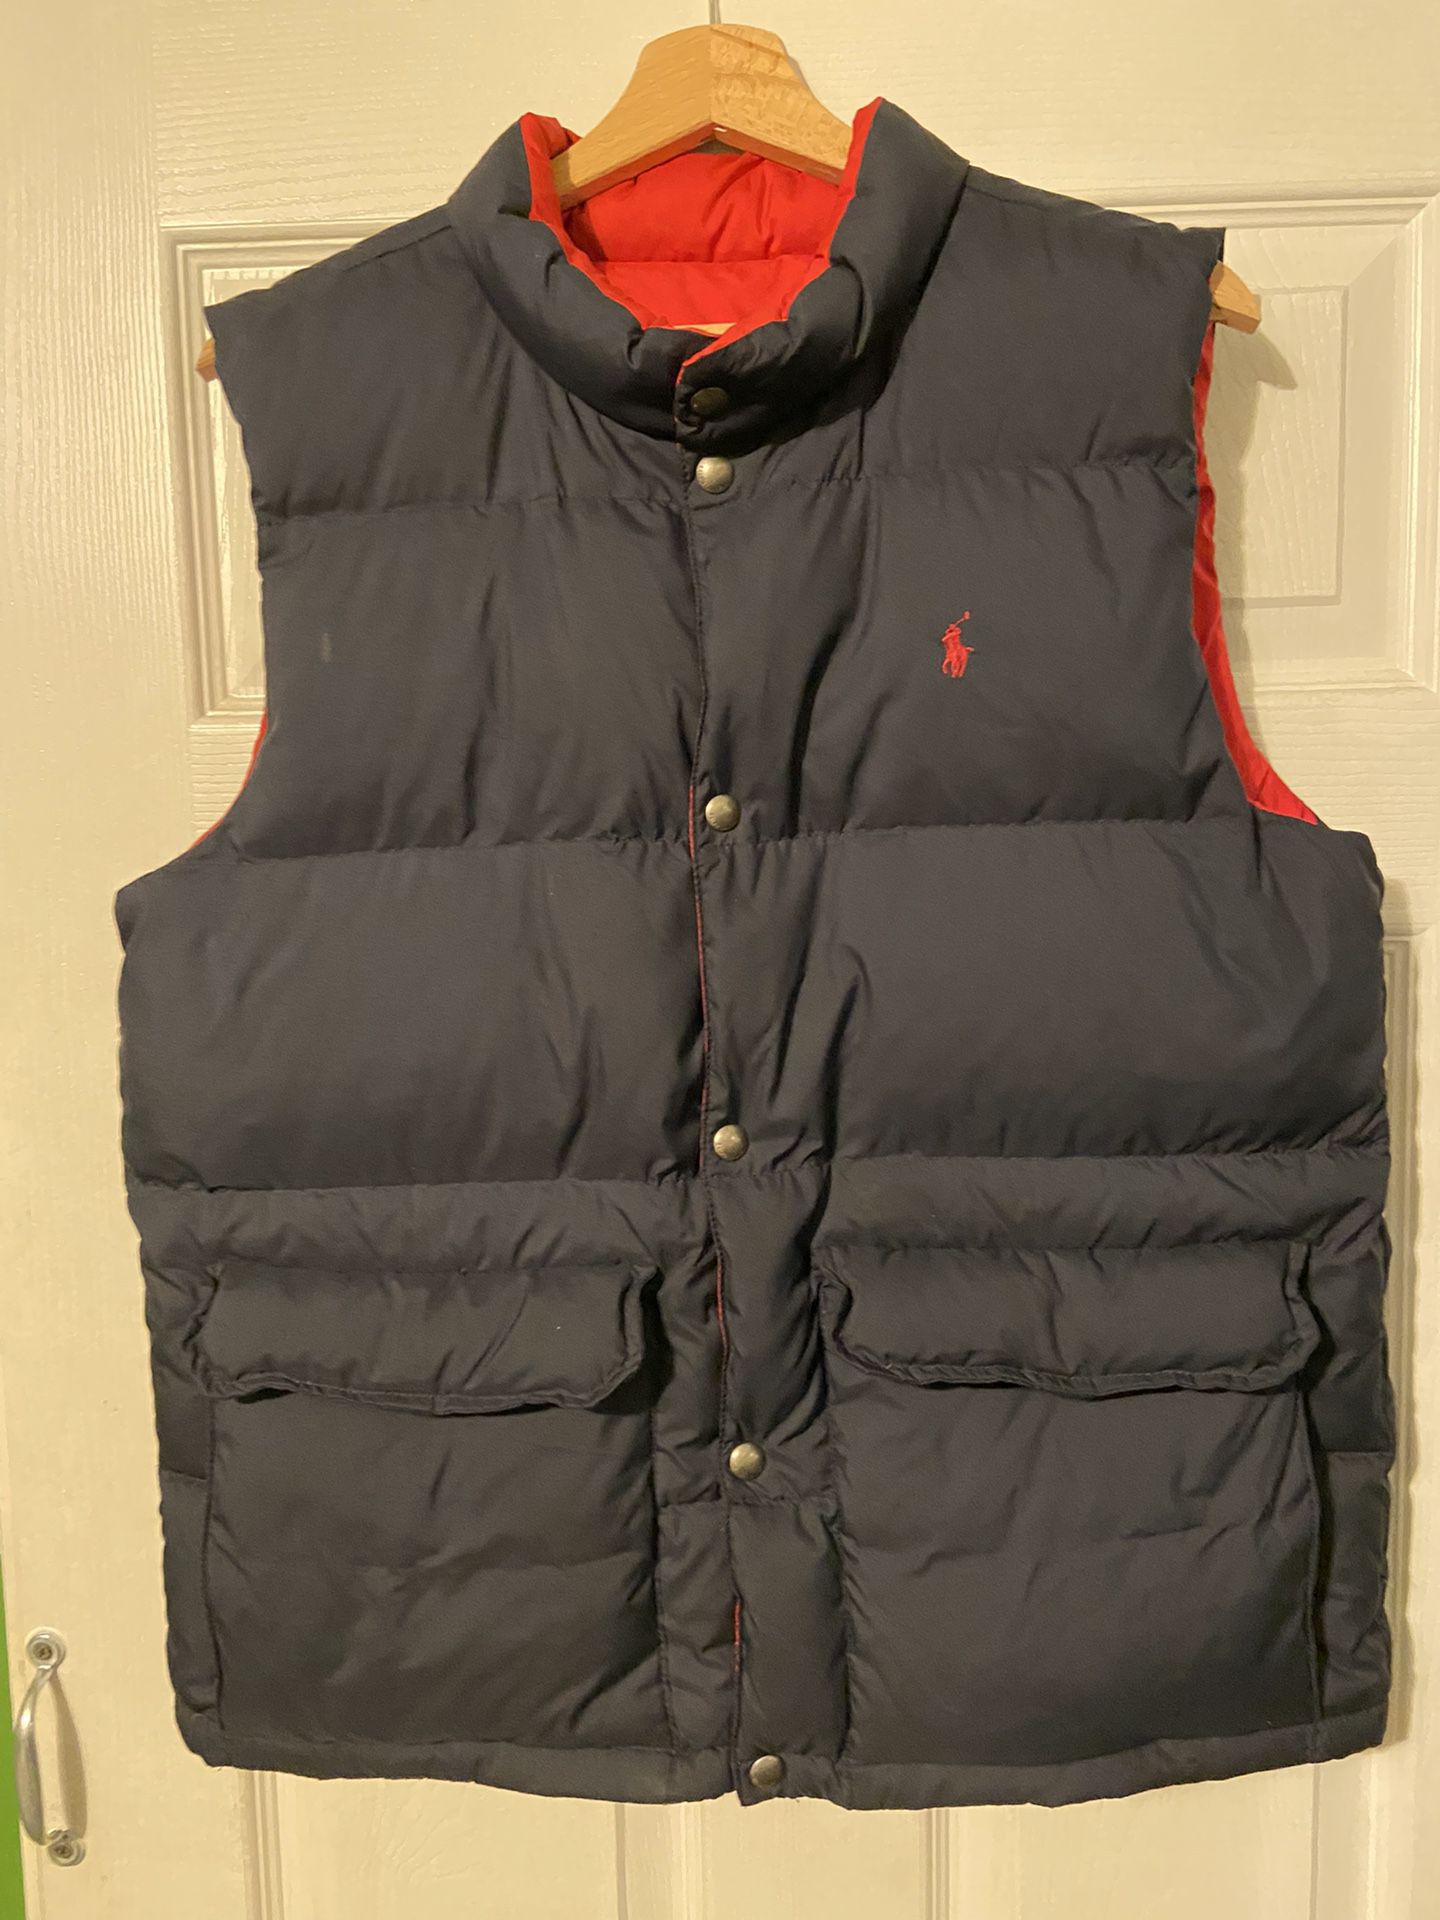 Ralph Lauren reversible vest unisex  Blue and red  Size  medium